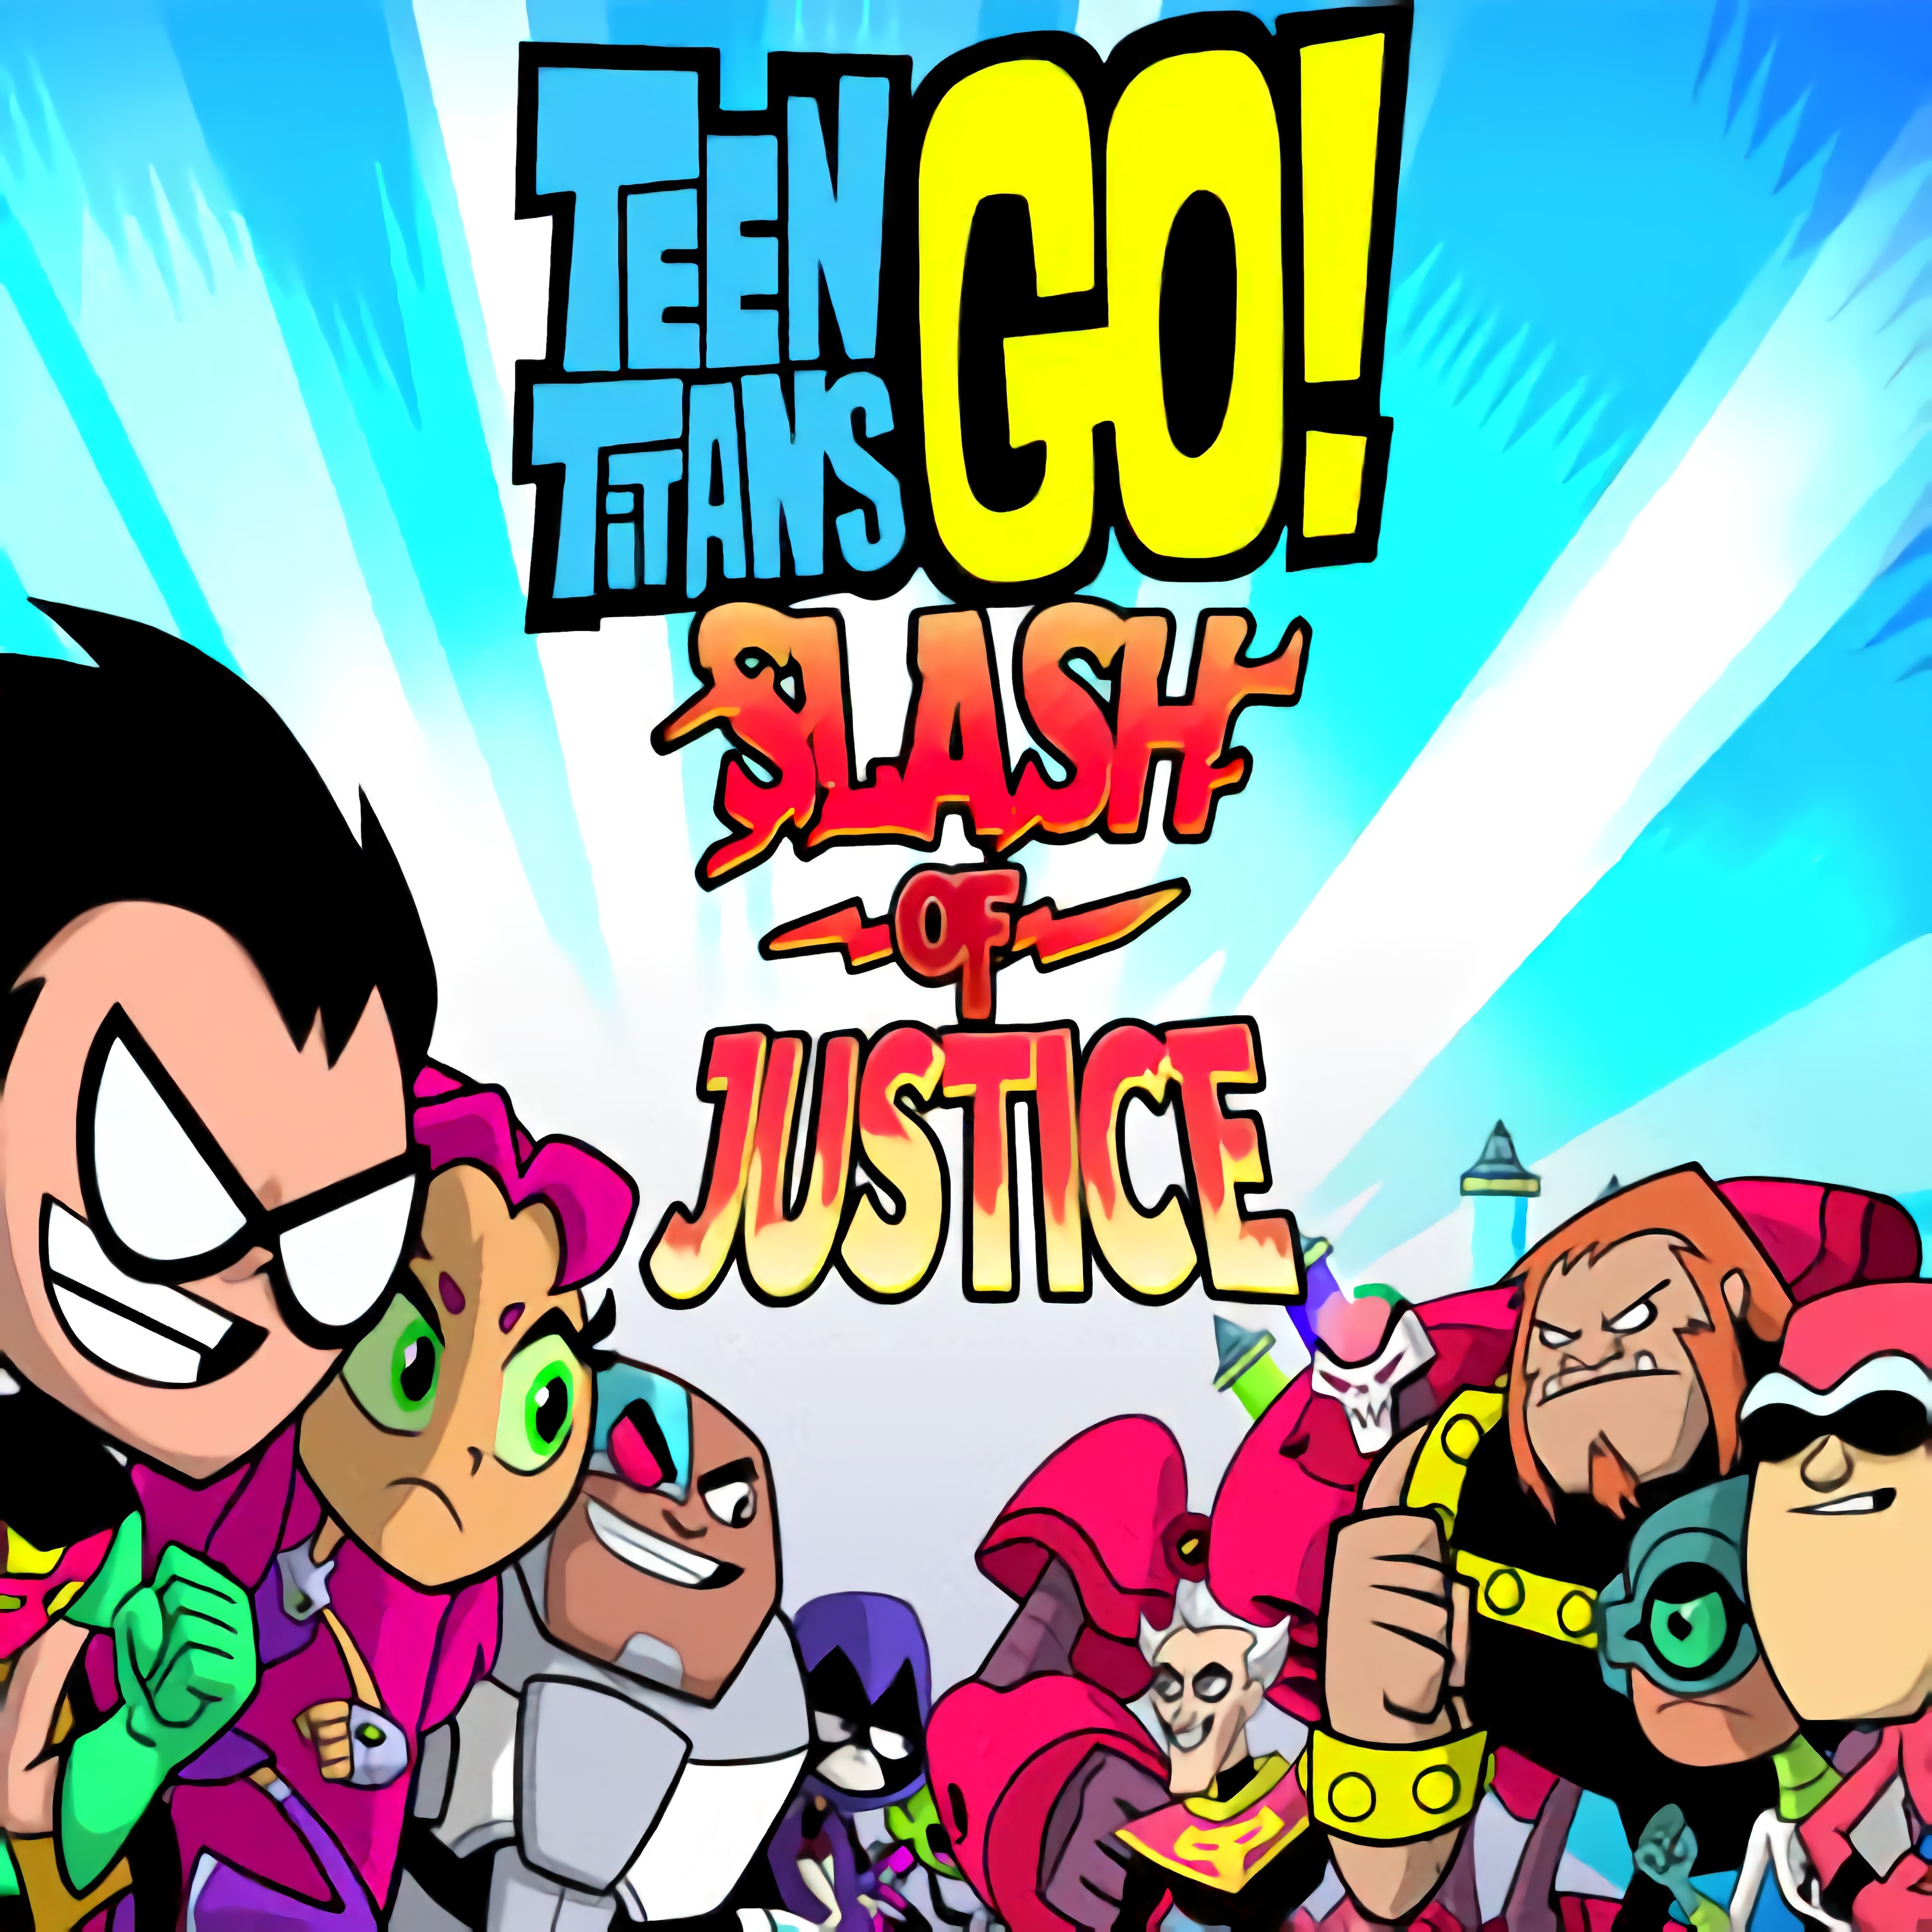 Slash of Justice - Teen Titans Go!